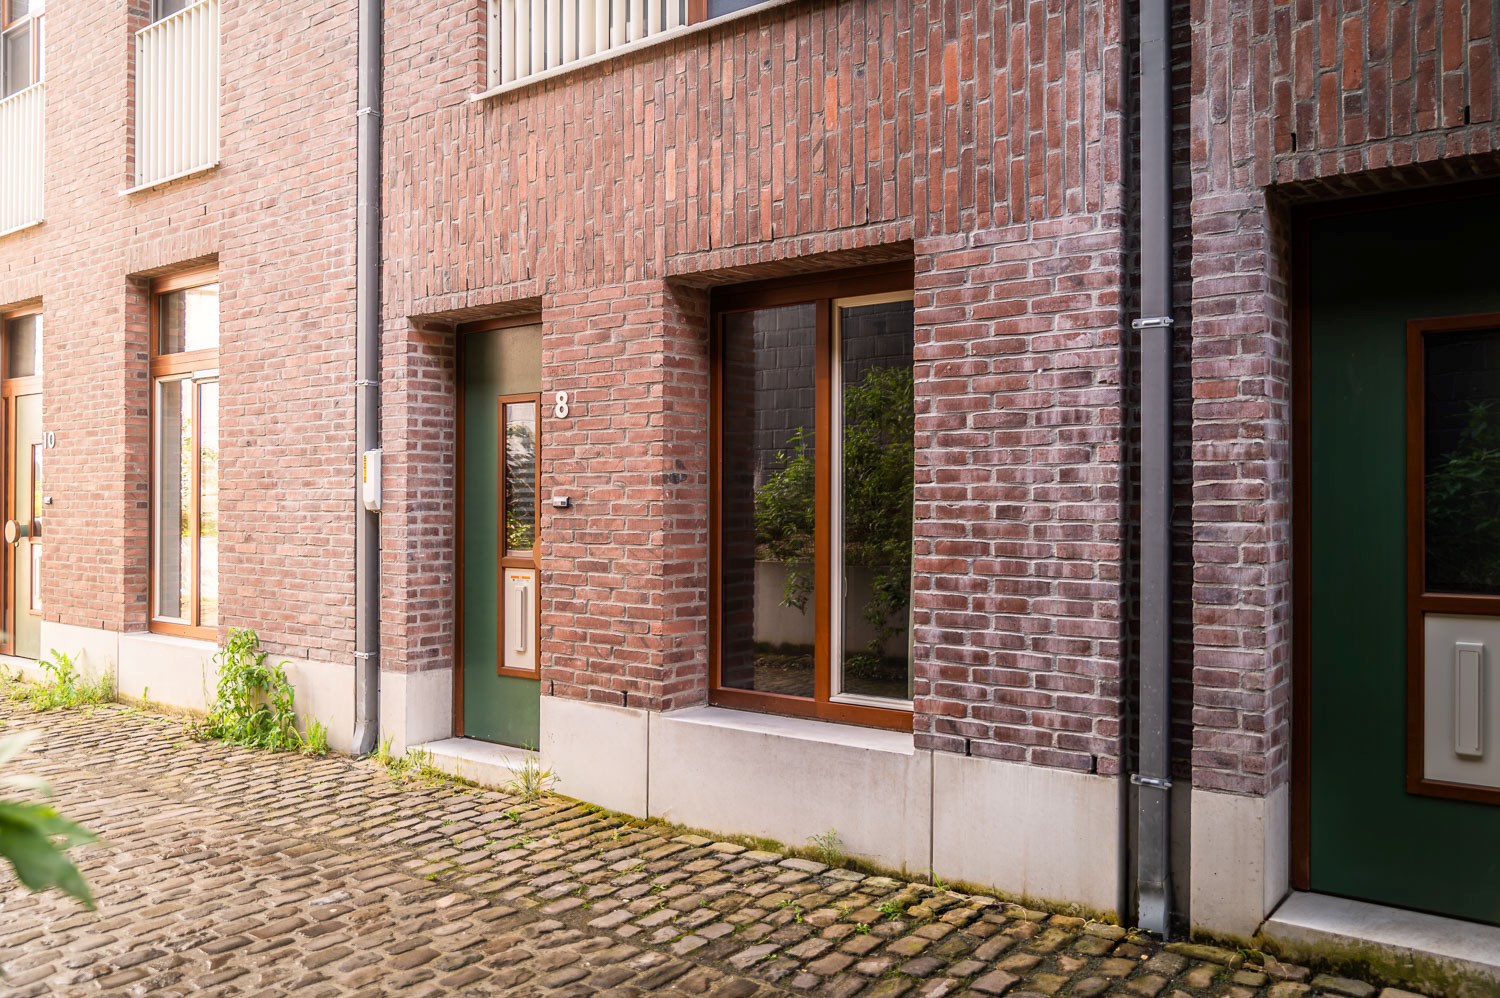 Investeringsvastgoed: nieuwbouwwoning in centrum Gent  foto 18